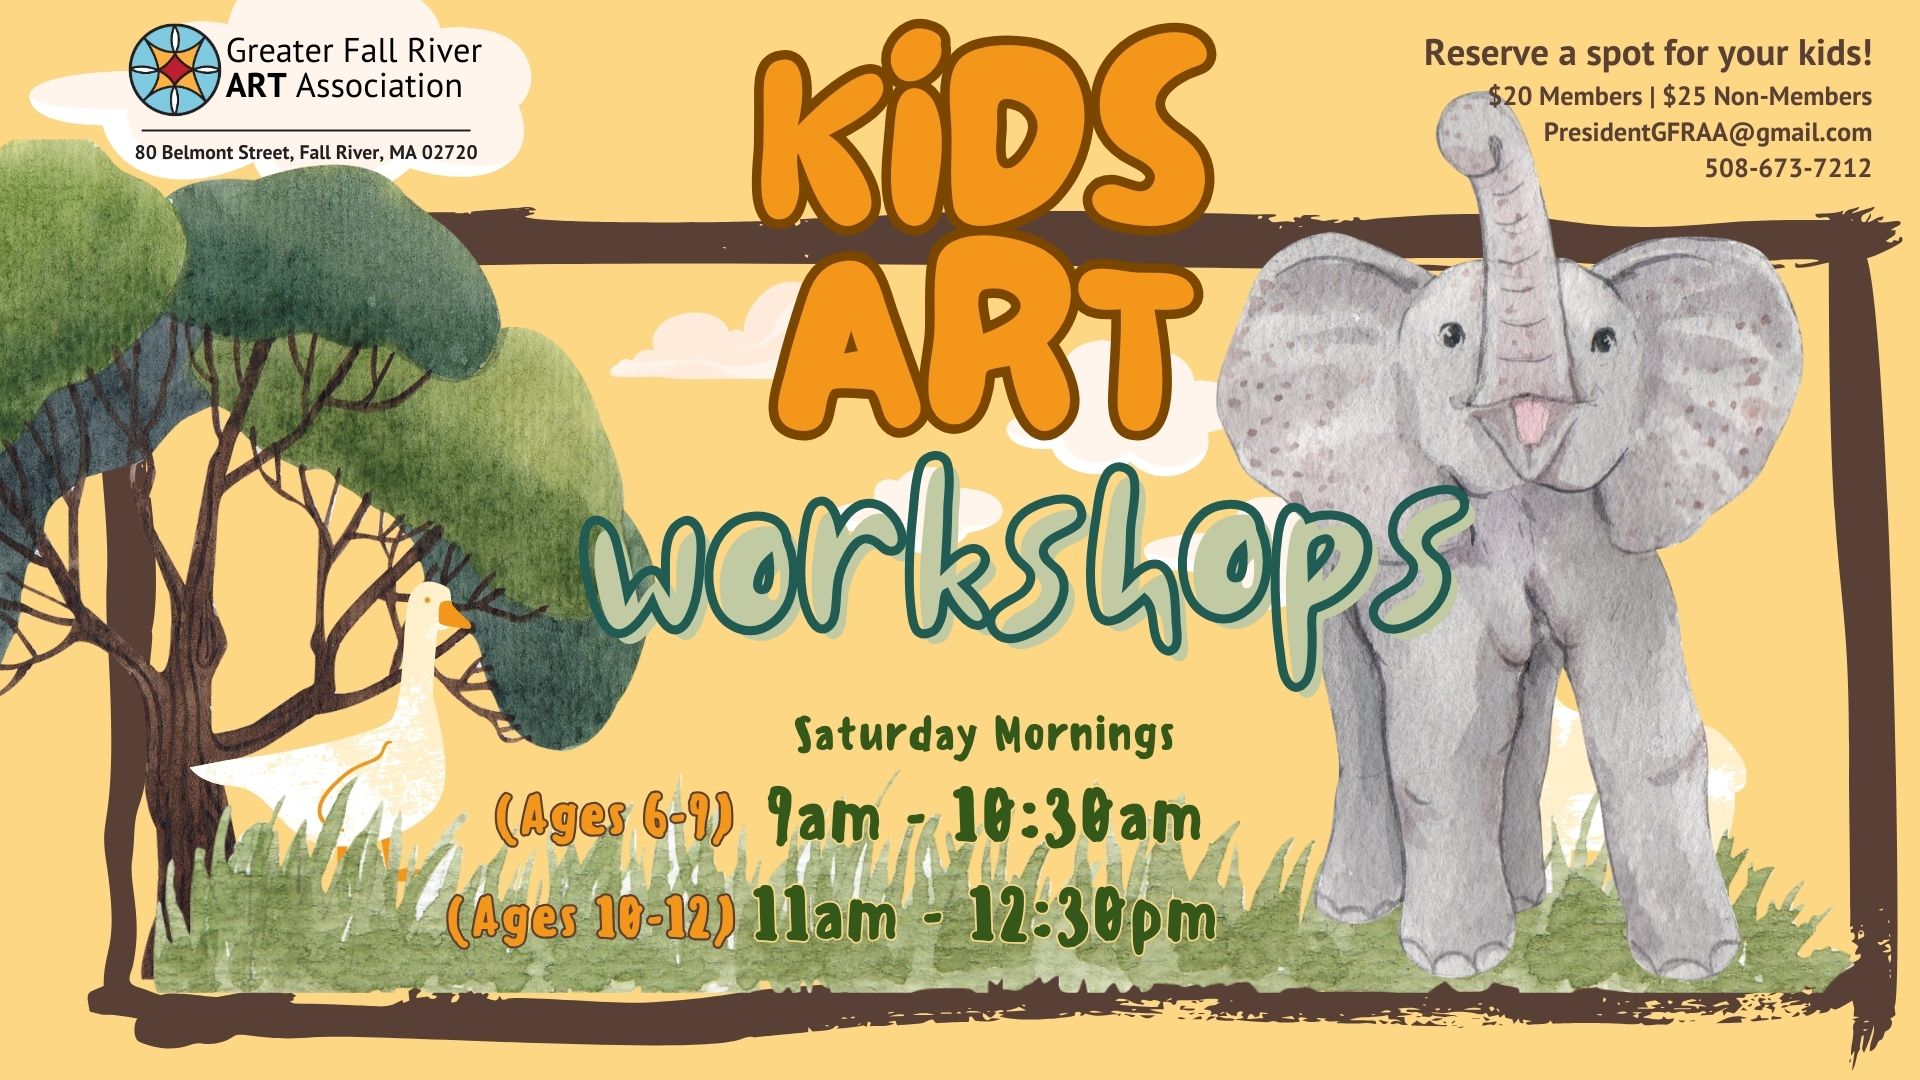 Two Kids Art Workshops offered on Saturdays